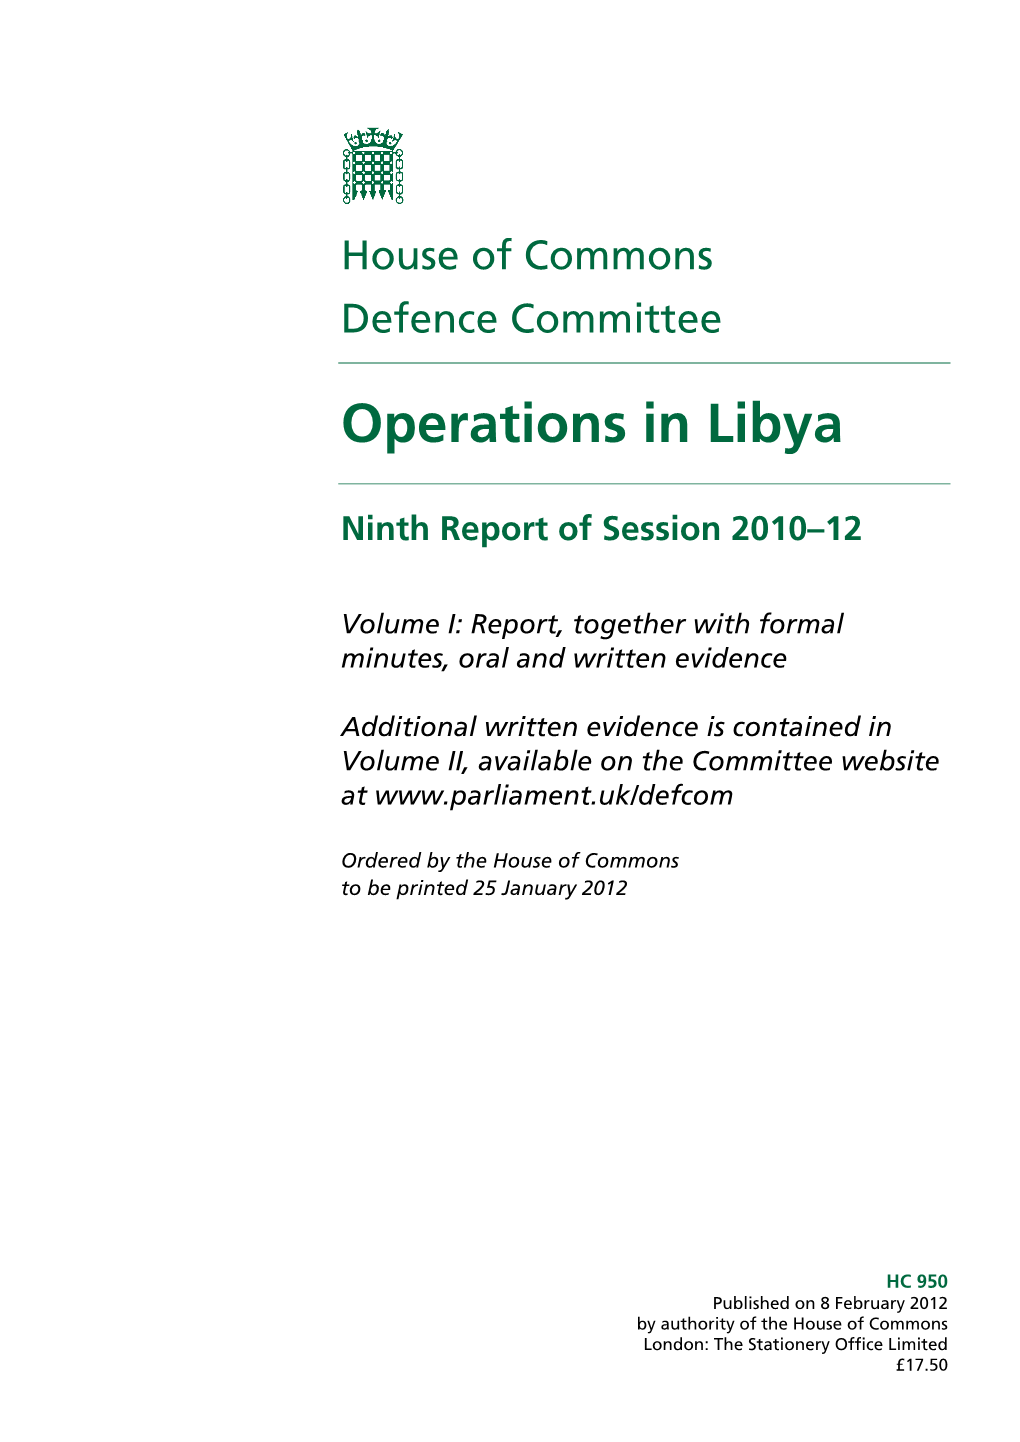 Operations in Libya